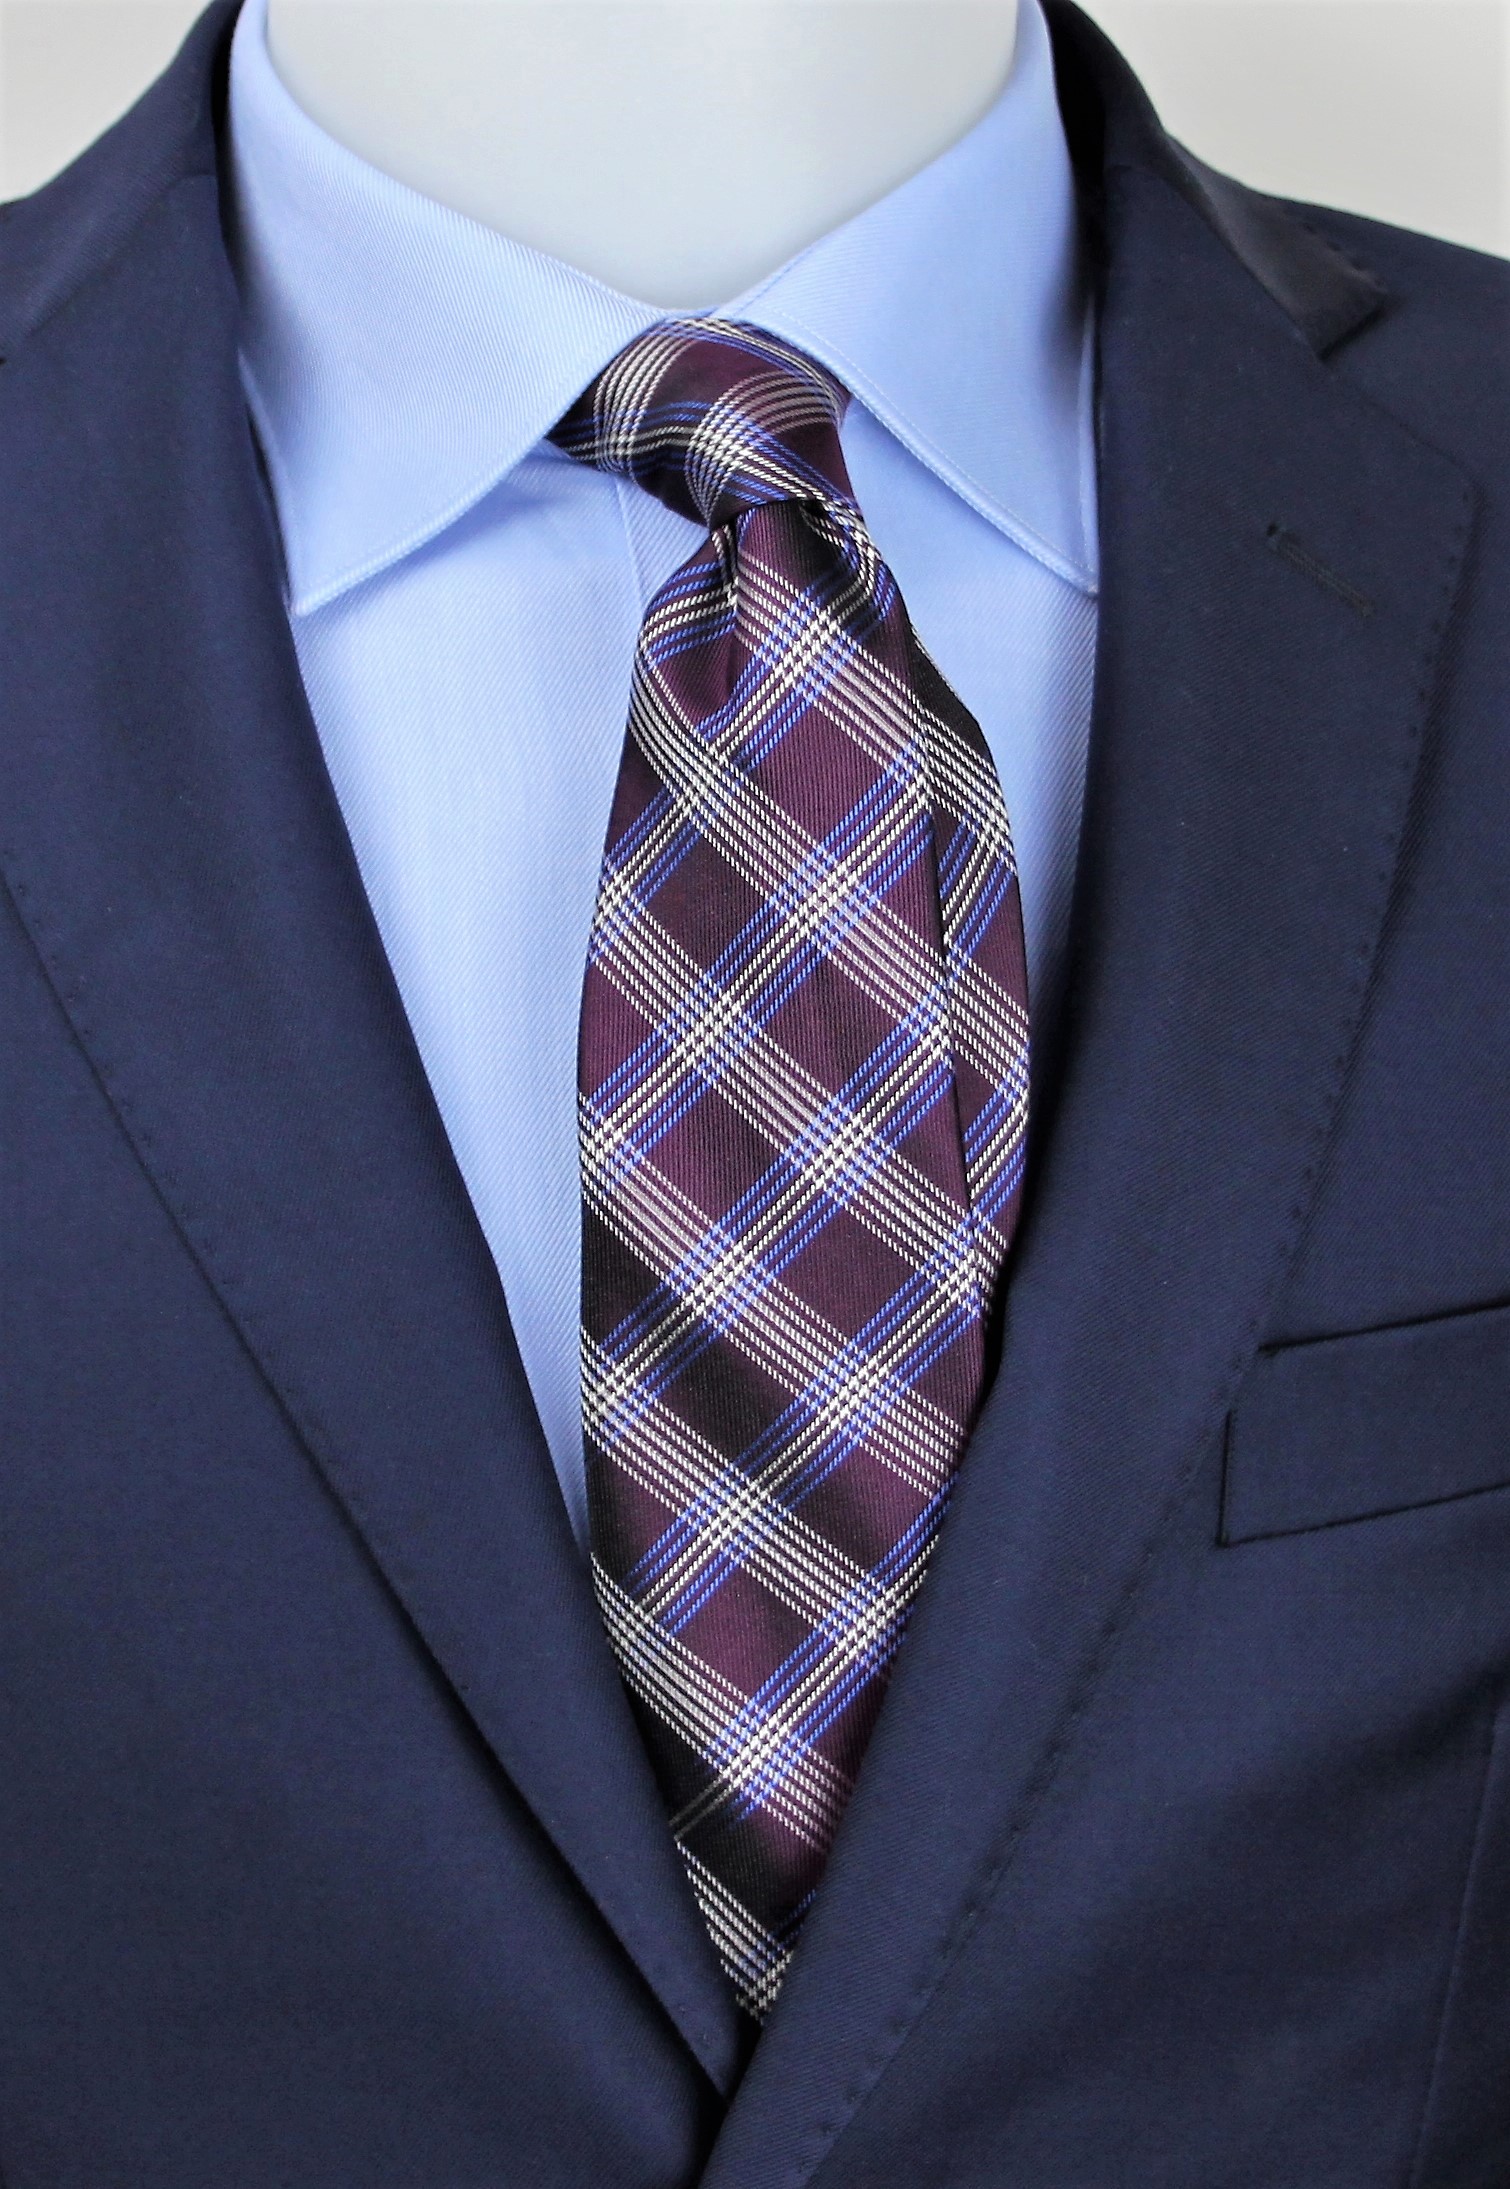 Cravatta seta scozzese bordeaux